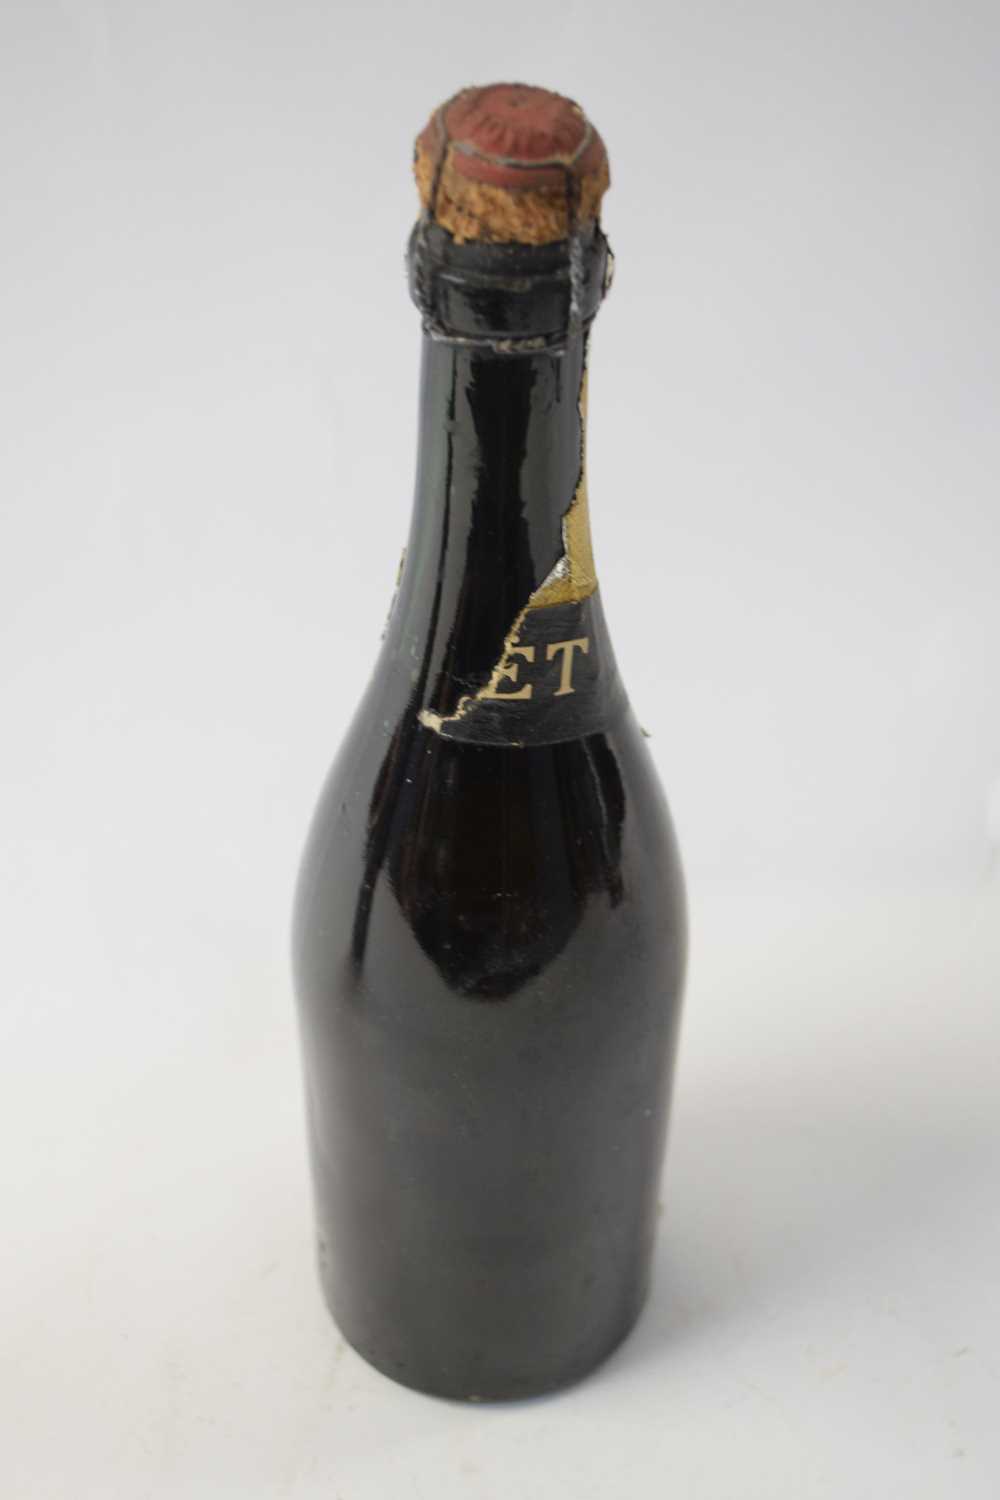 Bottle of Champagne Moet & Chandon 1947 75cl - Image 3 of 3